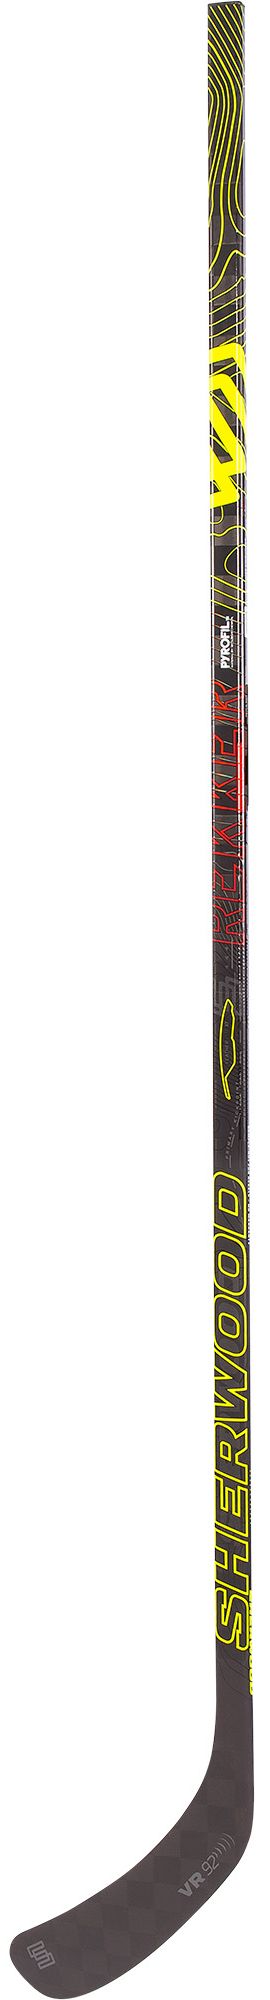 Sher-Wood Legend Pro Ice Hockey Stick - Intermediate